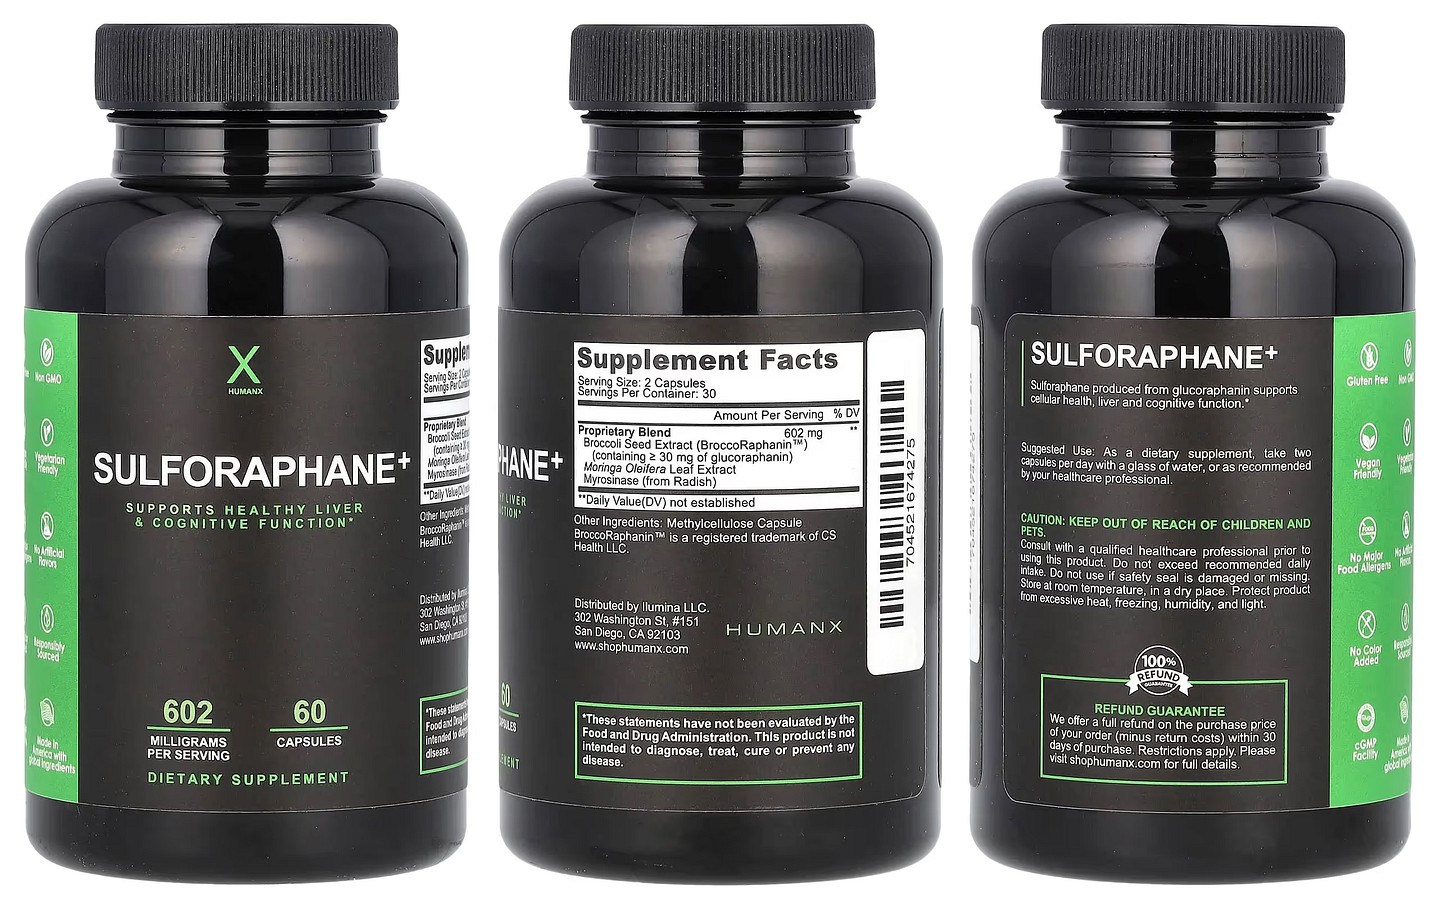 Harbinger HumanX, Sulforaphane+ packaging